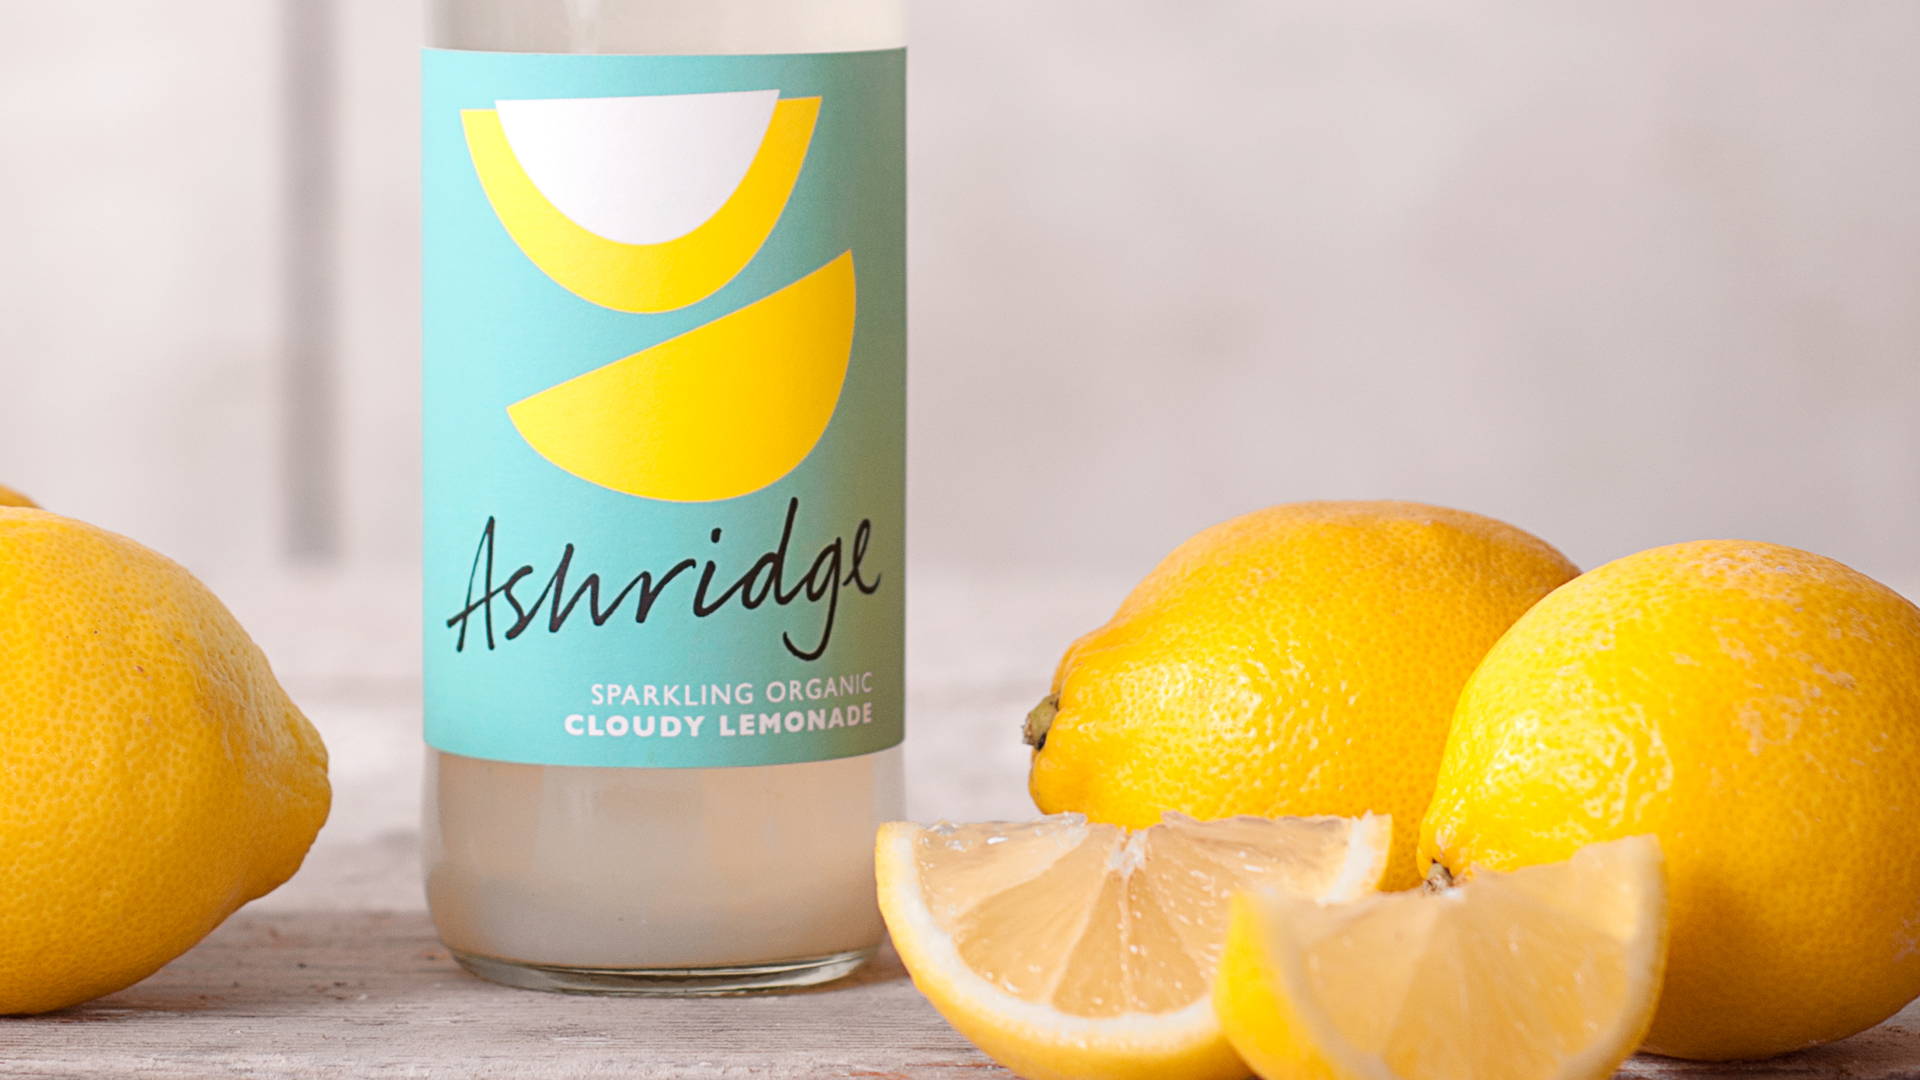 Featured image for Ashridge Drinks